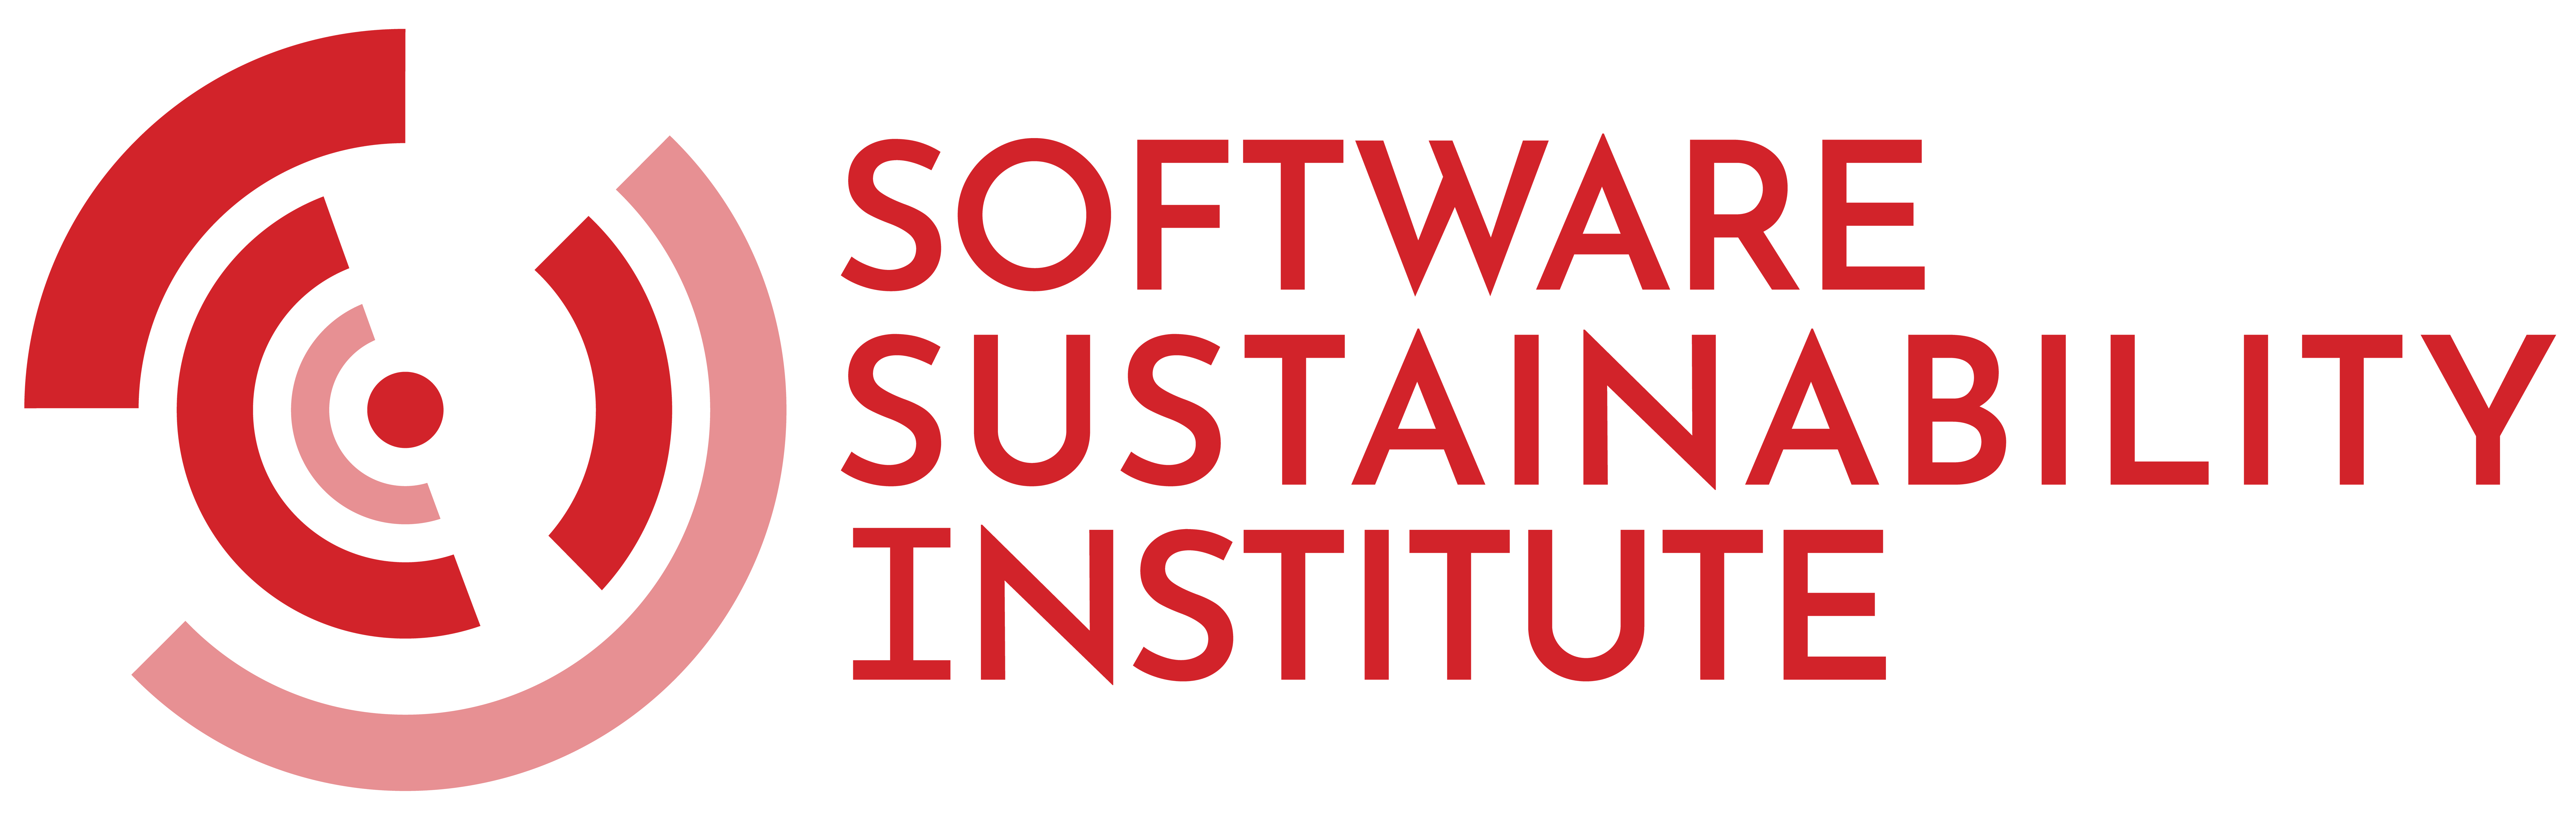 SSI Primary Logo